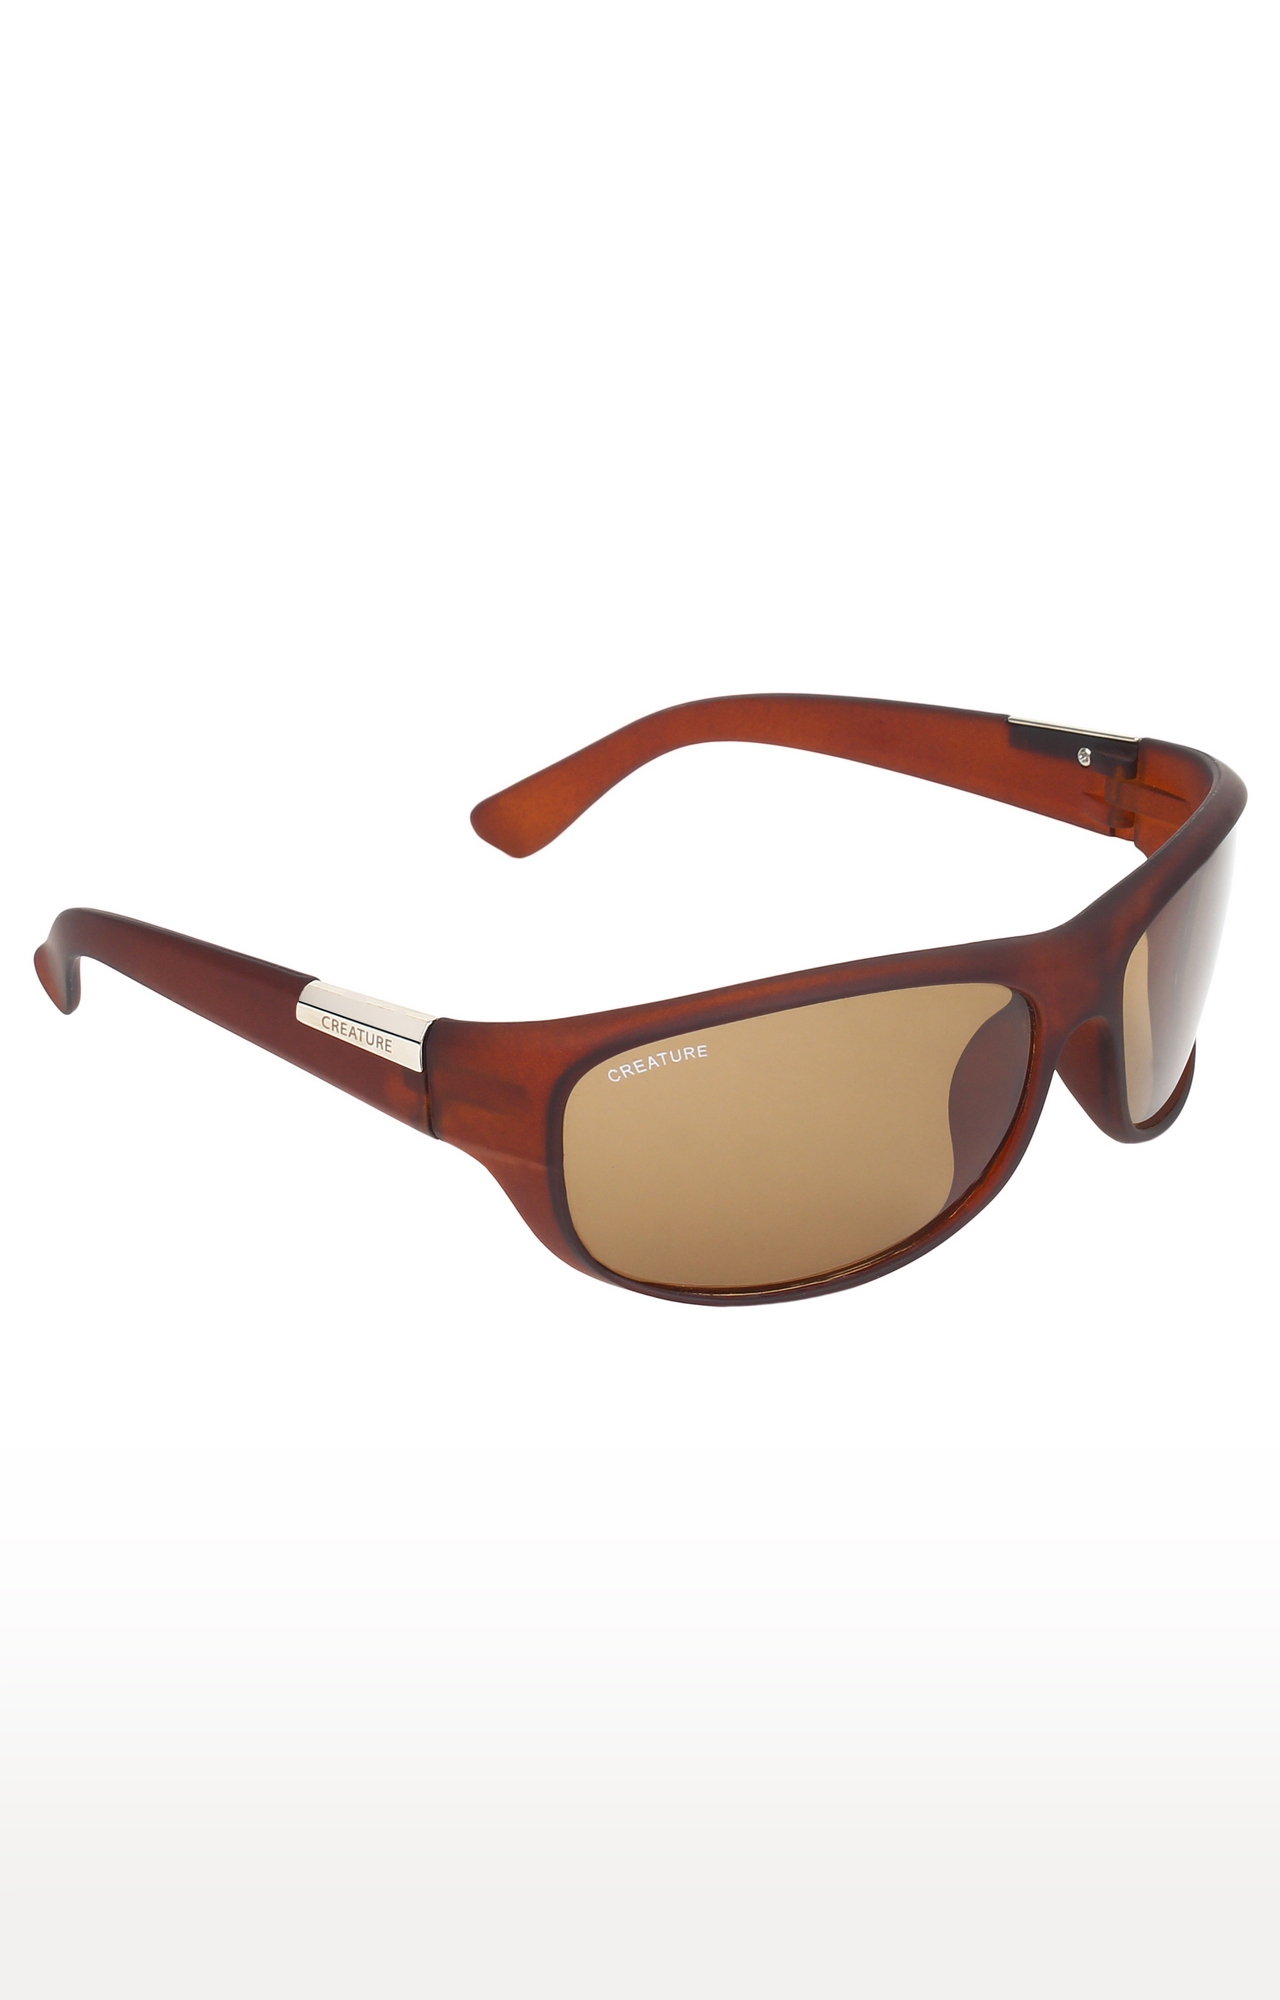 CREATURE | CREATURE Brown Matte Finish Wrap-Around Sunglasses For Men (Lens-Brown|Frame-Brown)